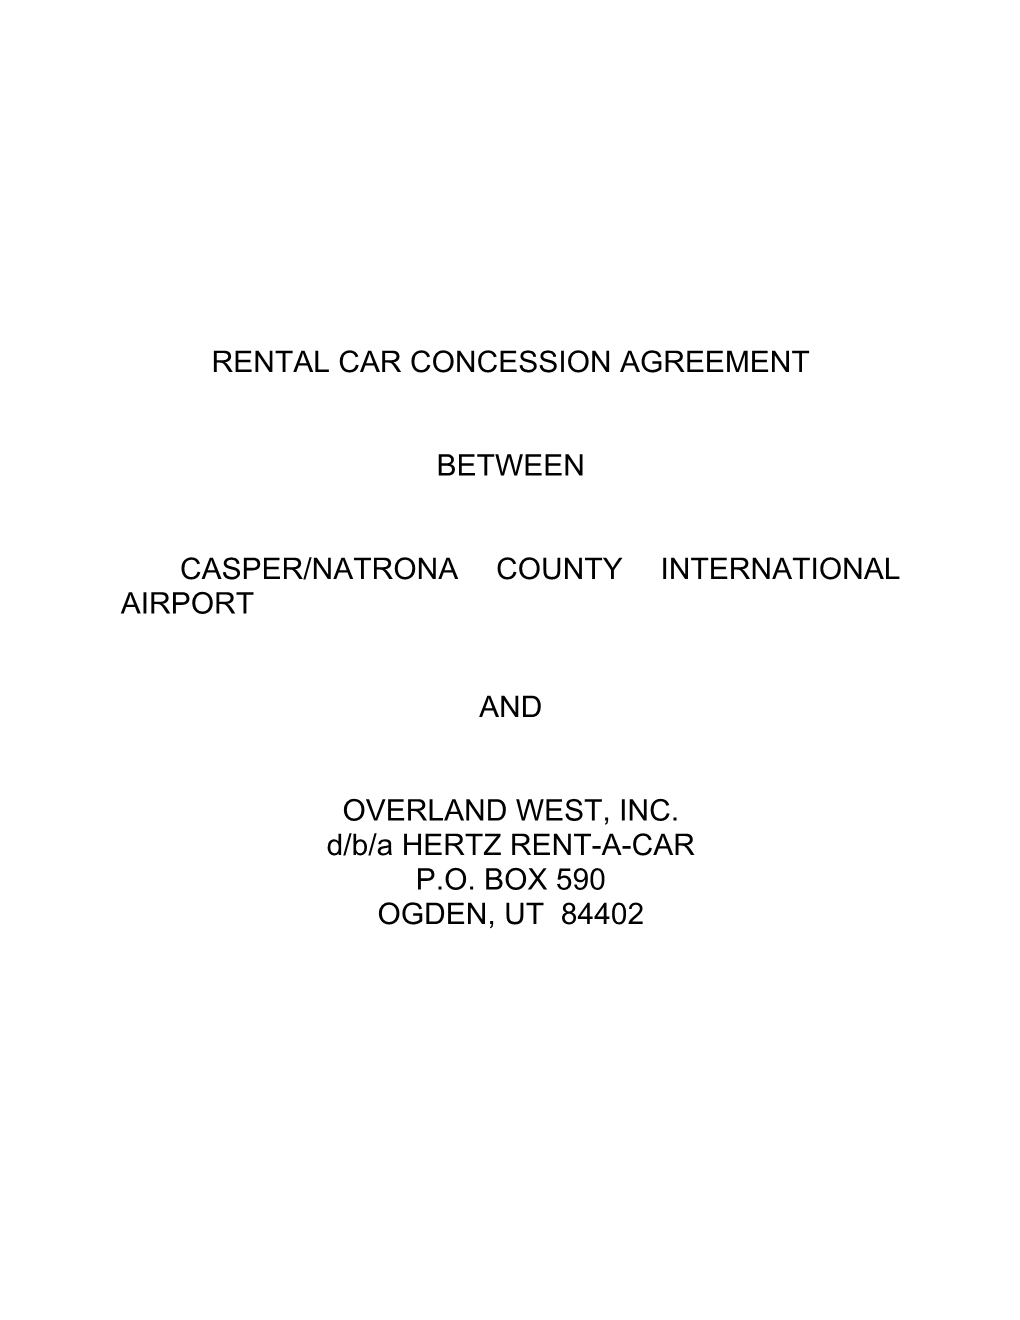 Rental Car Concession Agreement